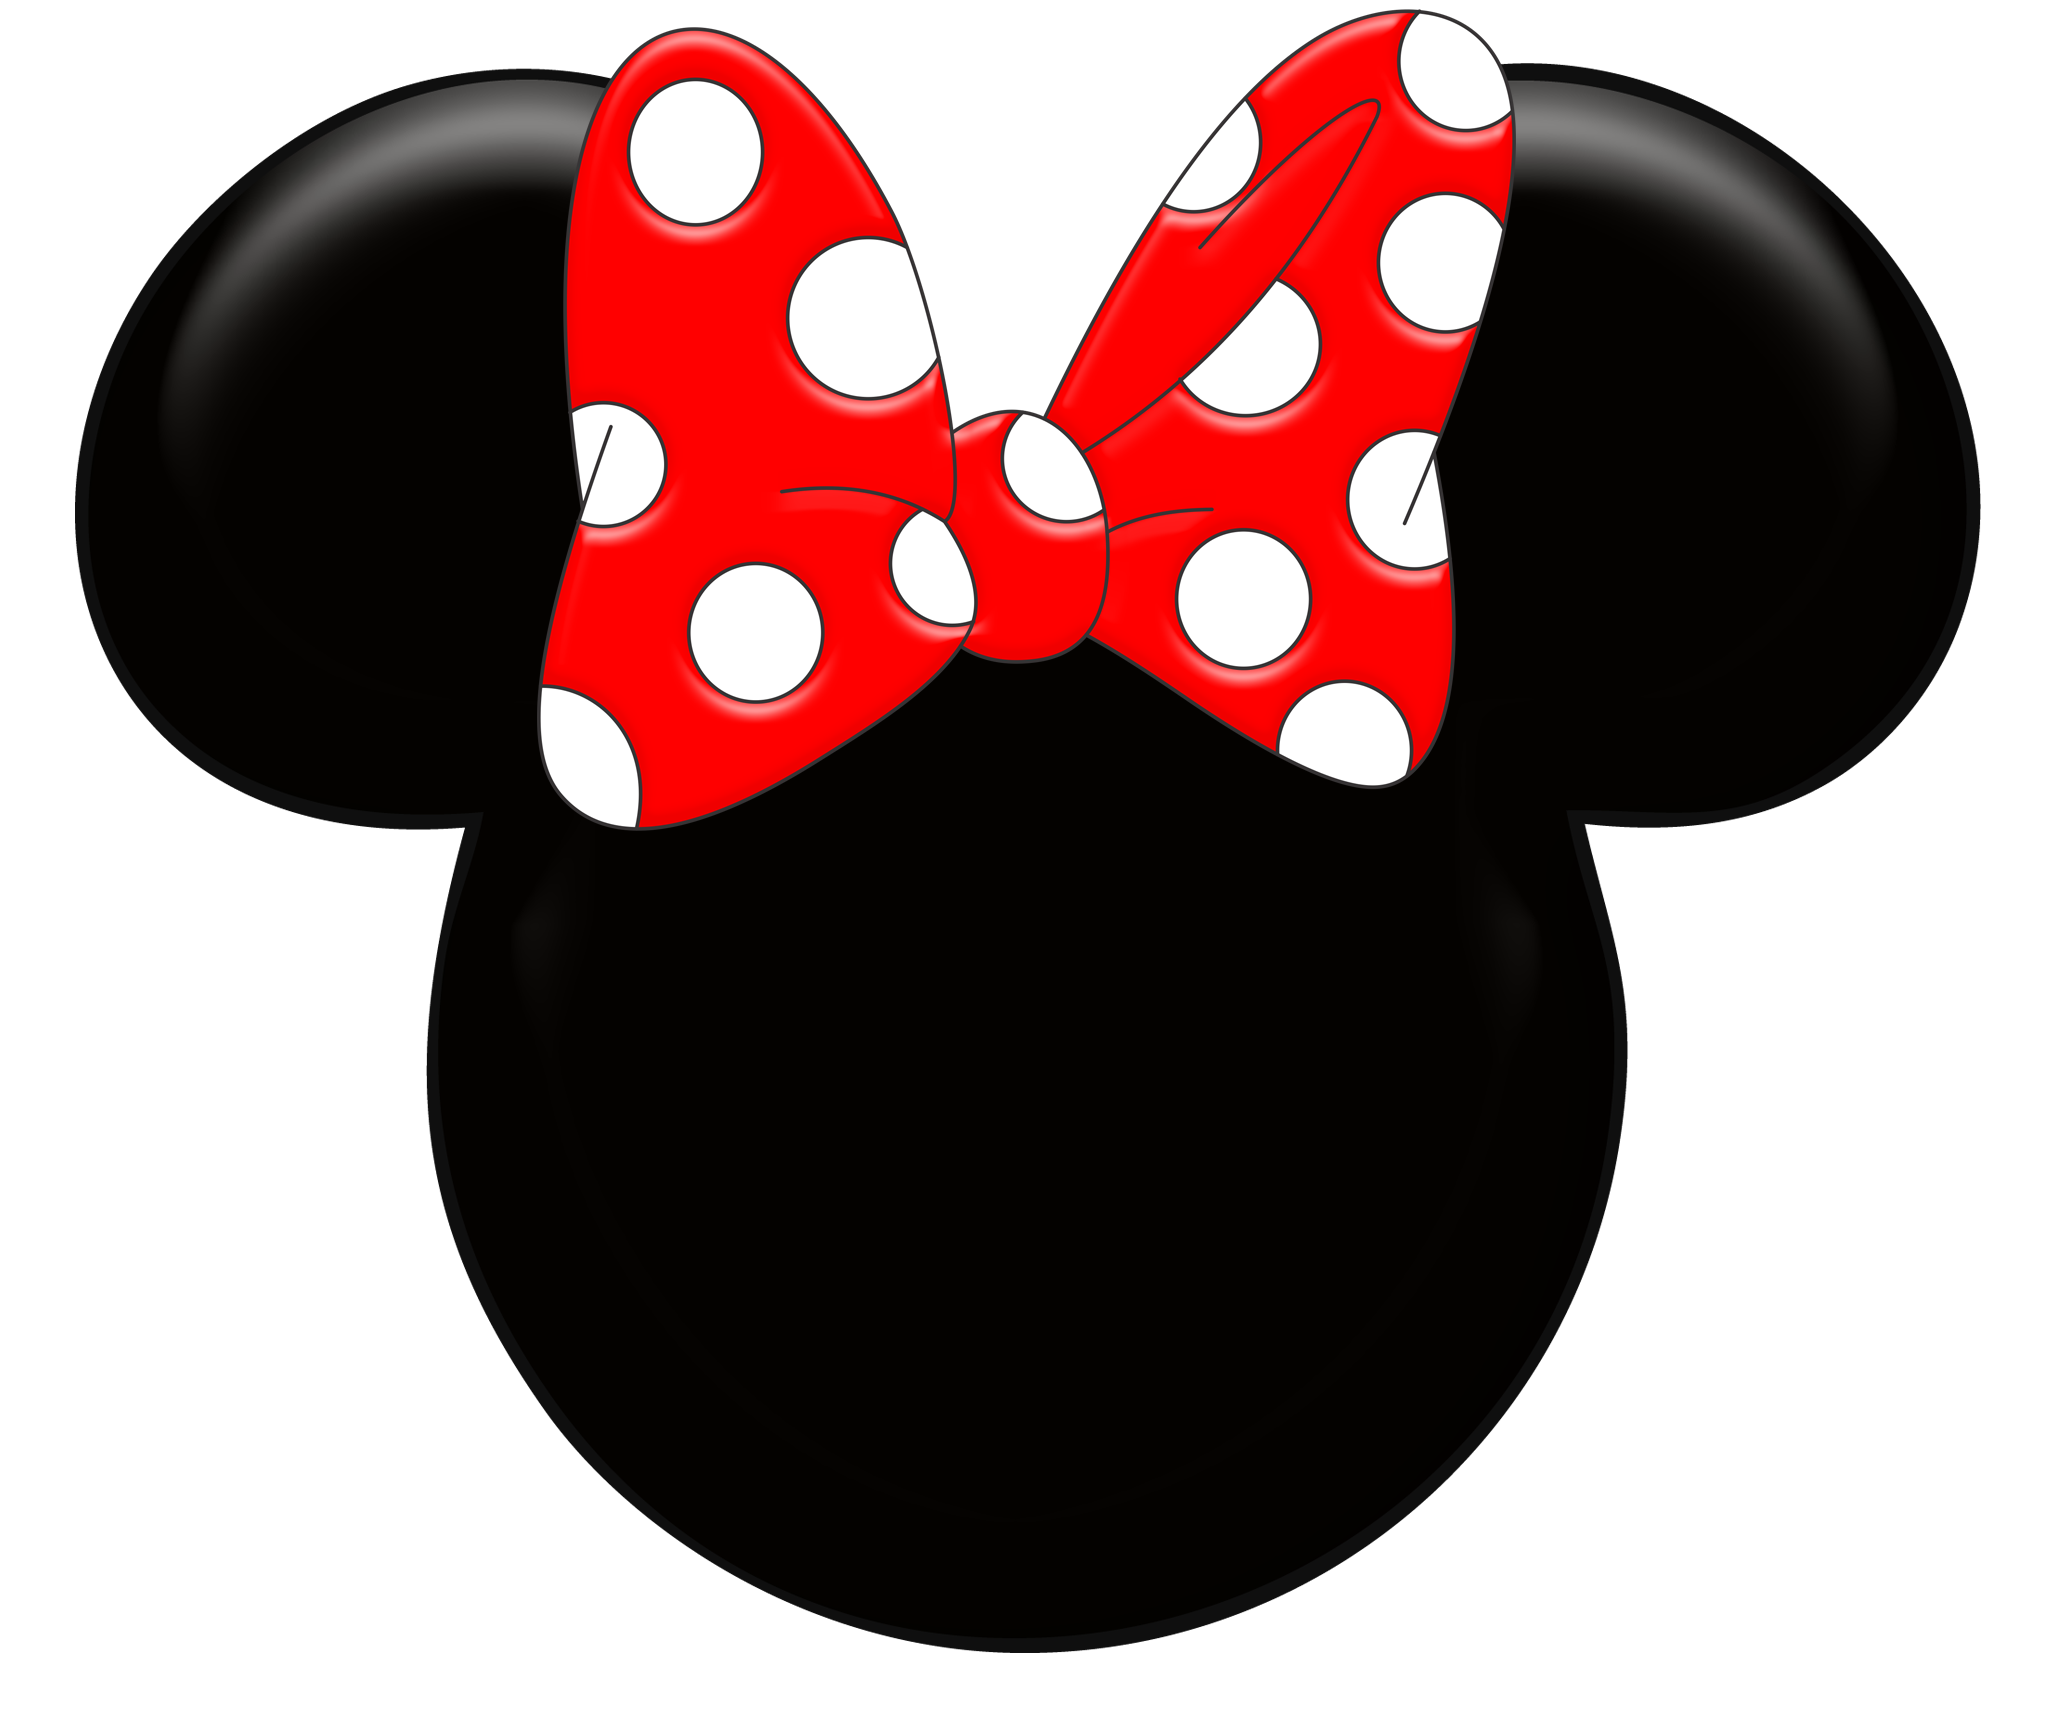 Minnie Mouse Wallpapers Desktop | PixelsTalk.Net